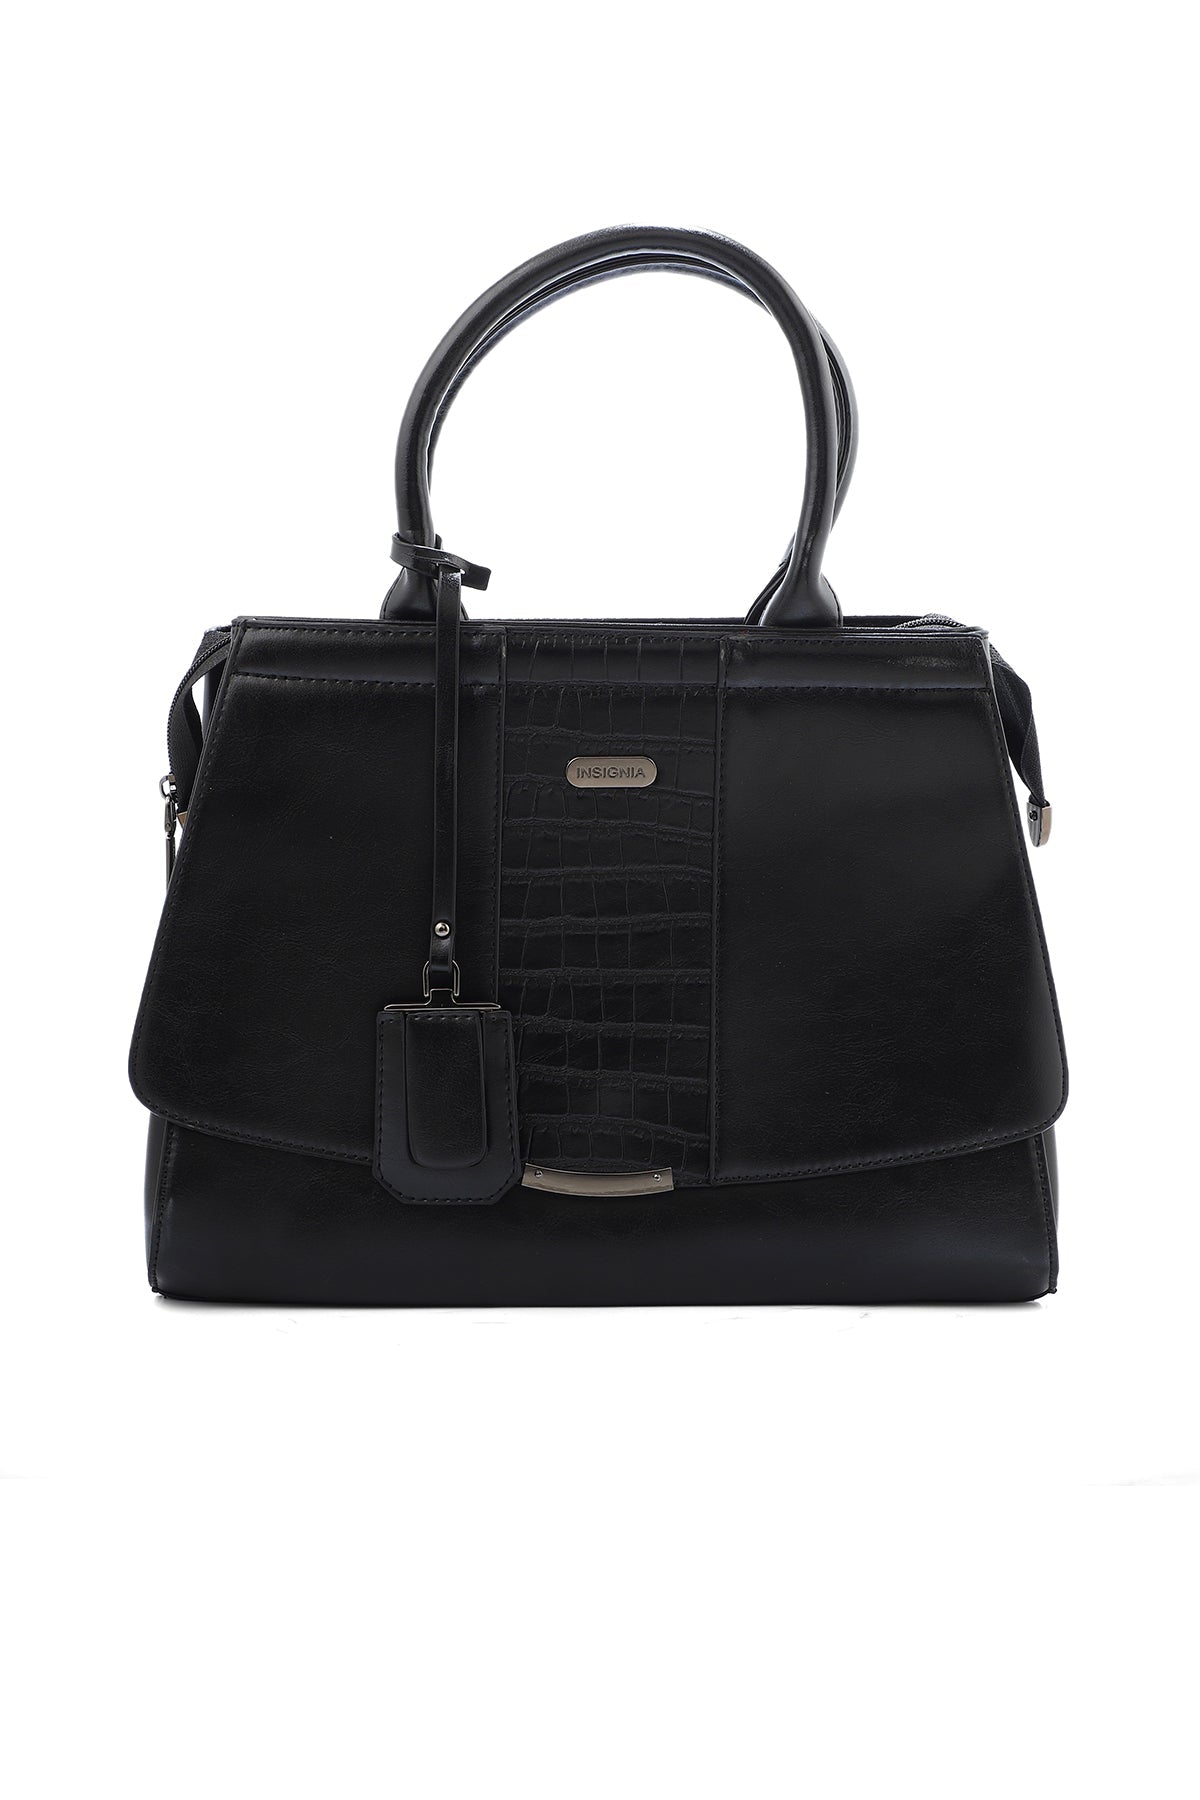 Formal Tote Hand Bags B14971-Black